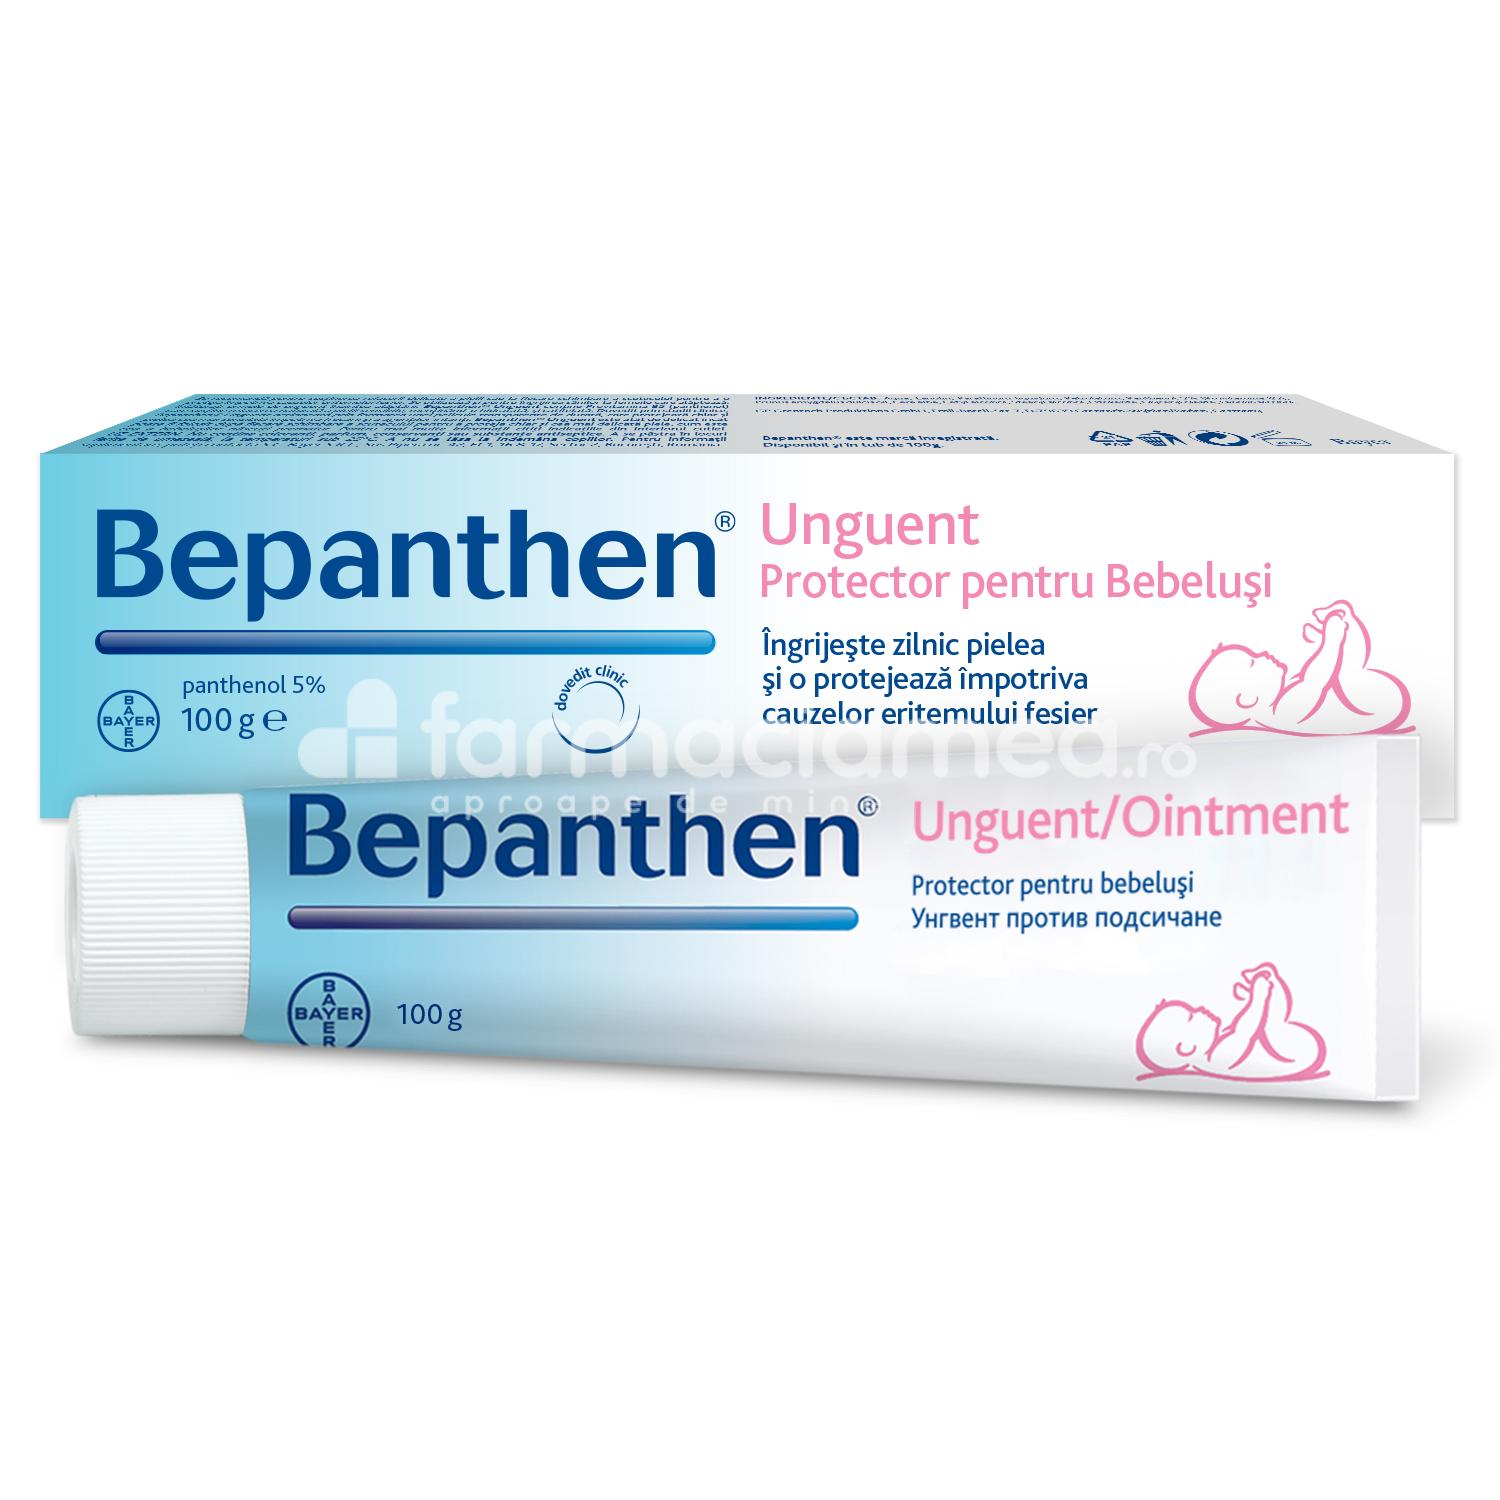 Dermatologie pediatrică - Bepanthen 5% panthenol unguent, 100g, Bayer, farmaciamea.ro